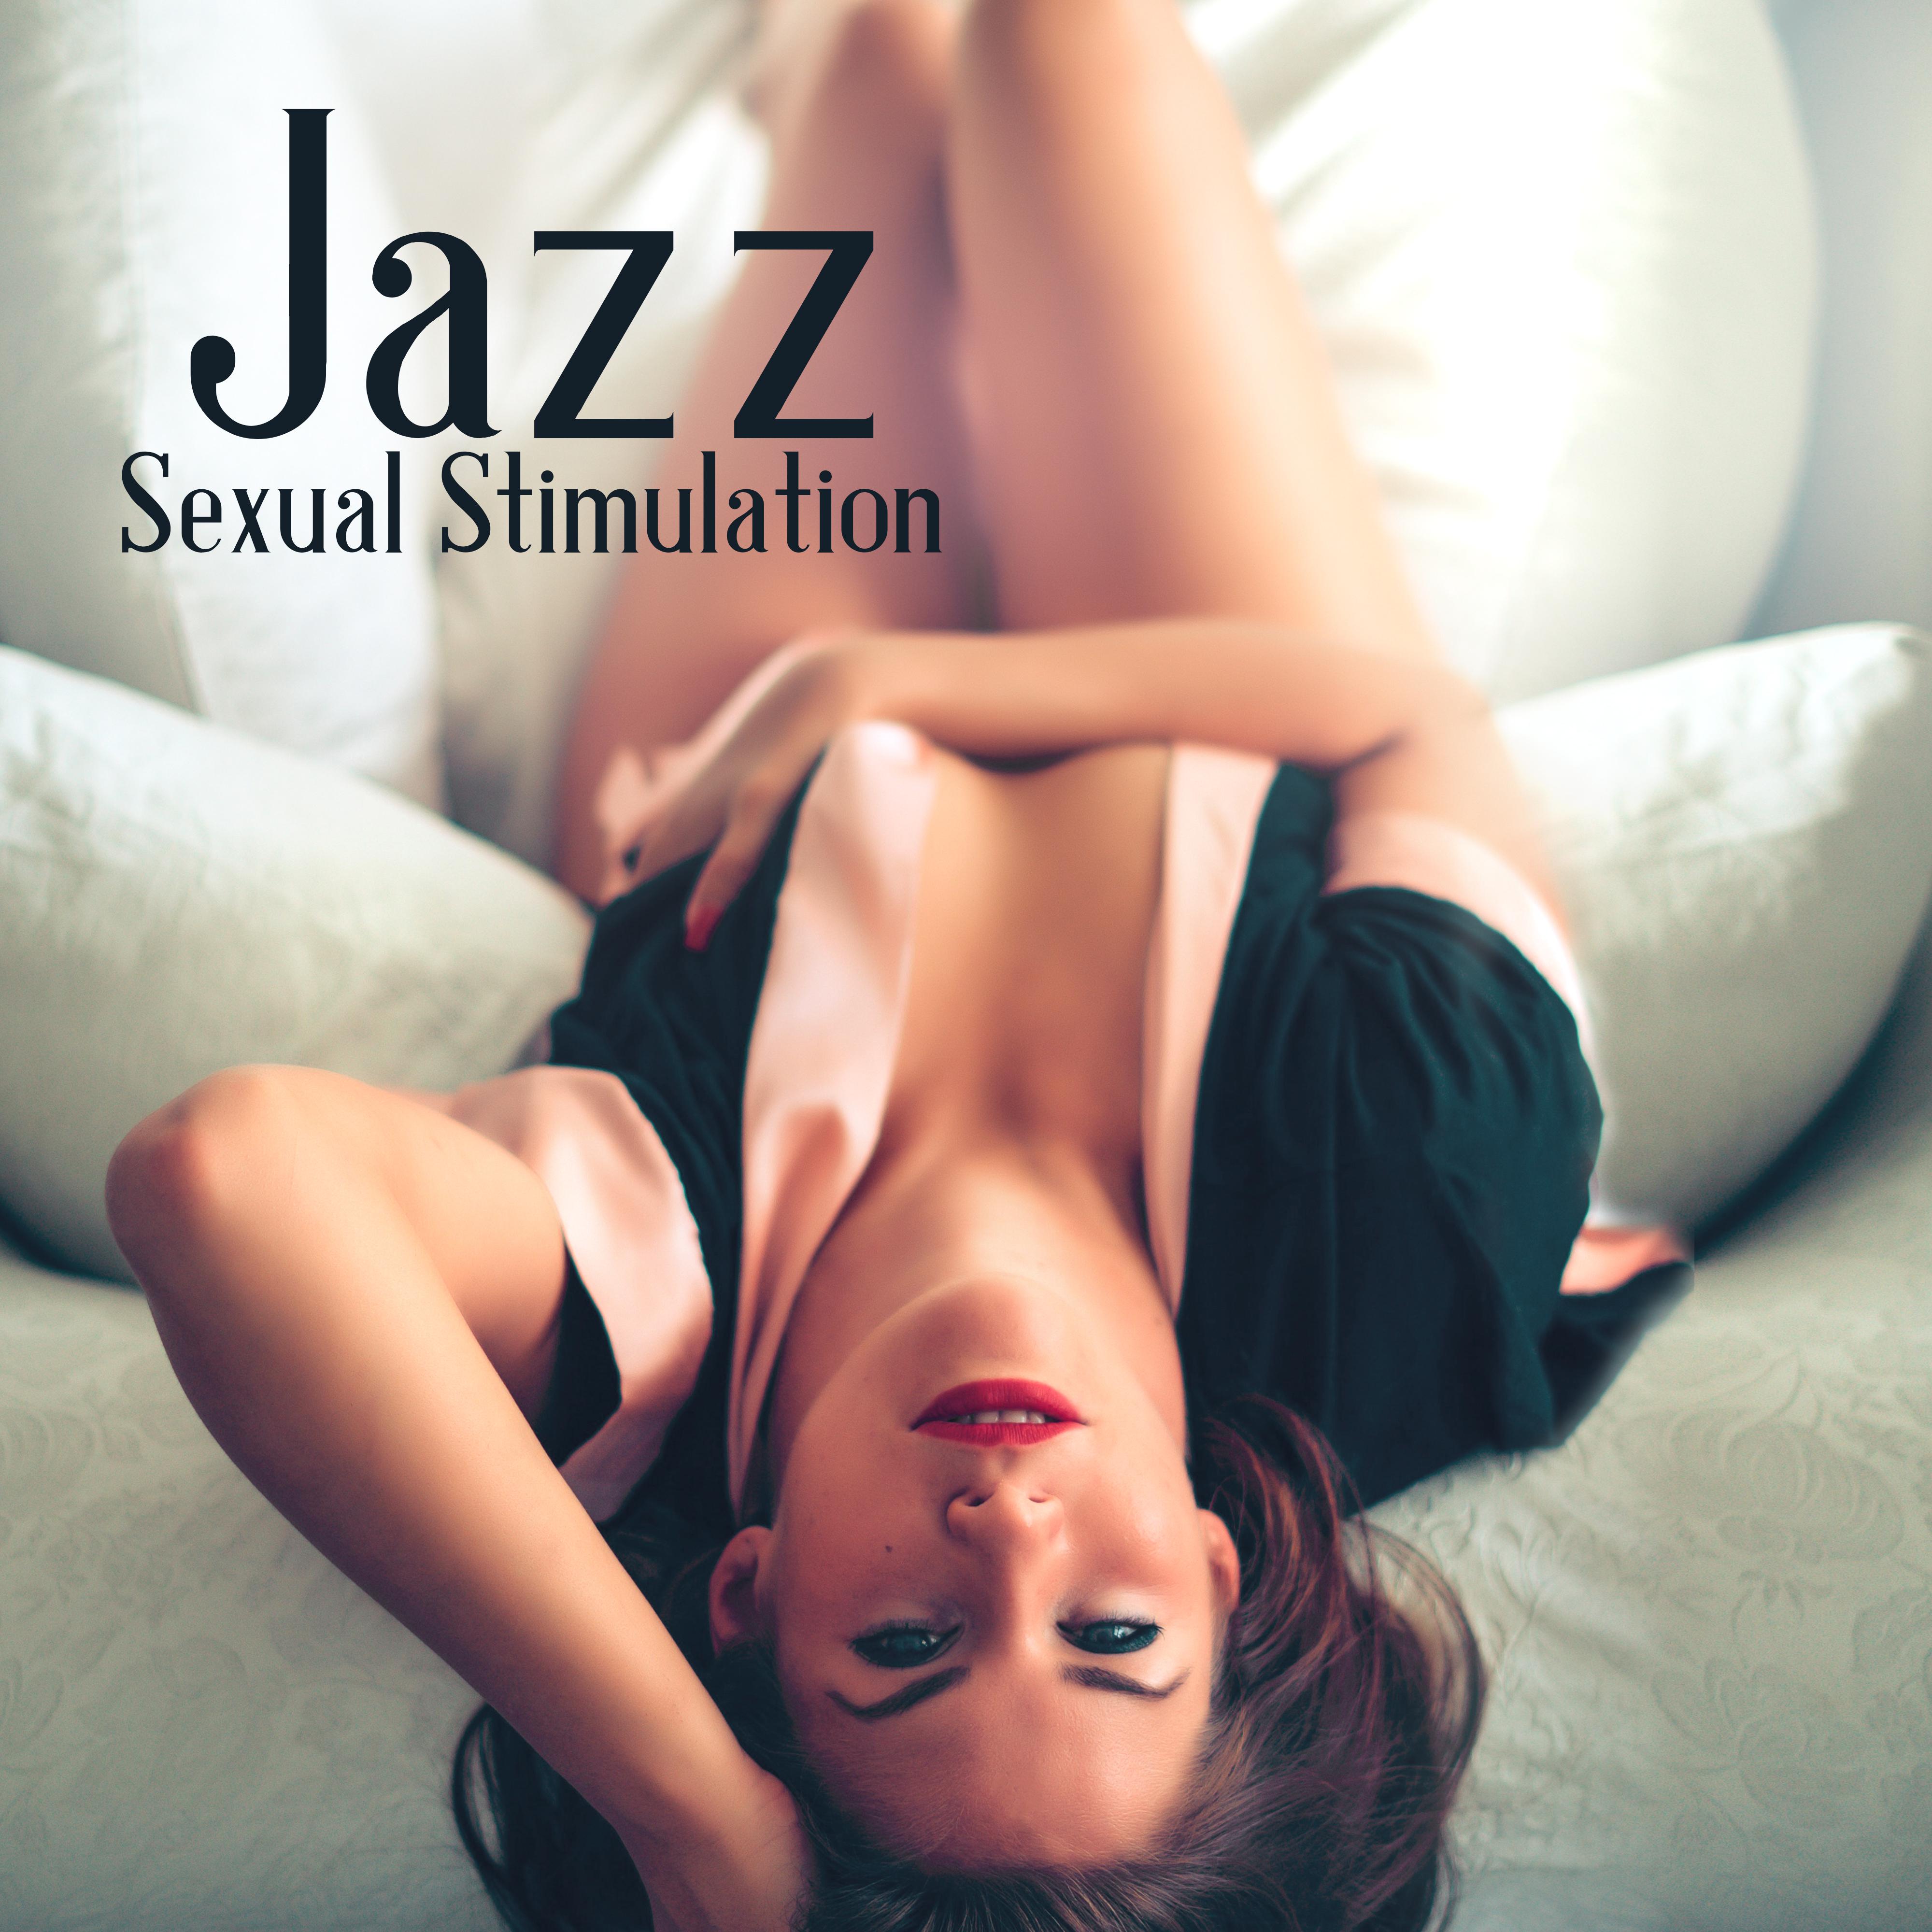 Jazz ****** Stimulation – Kamasutra Music, Jazz for Erotic Massage, *** Music at Night, Sensual Jazz Music to Calm Down